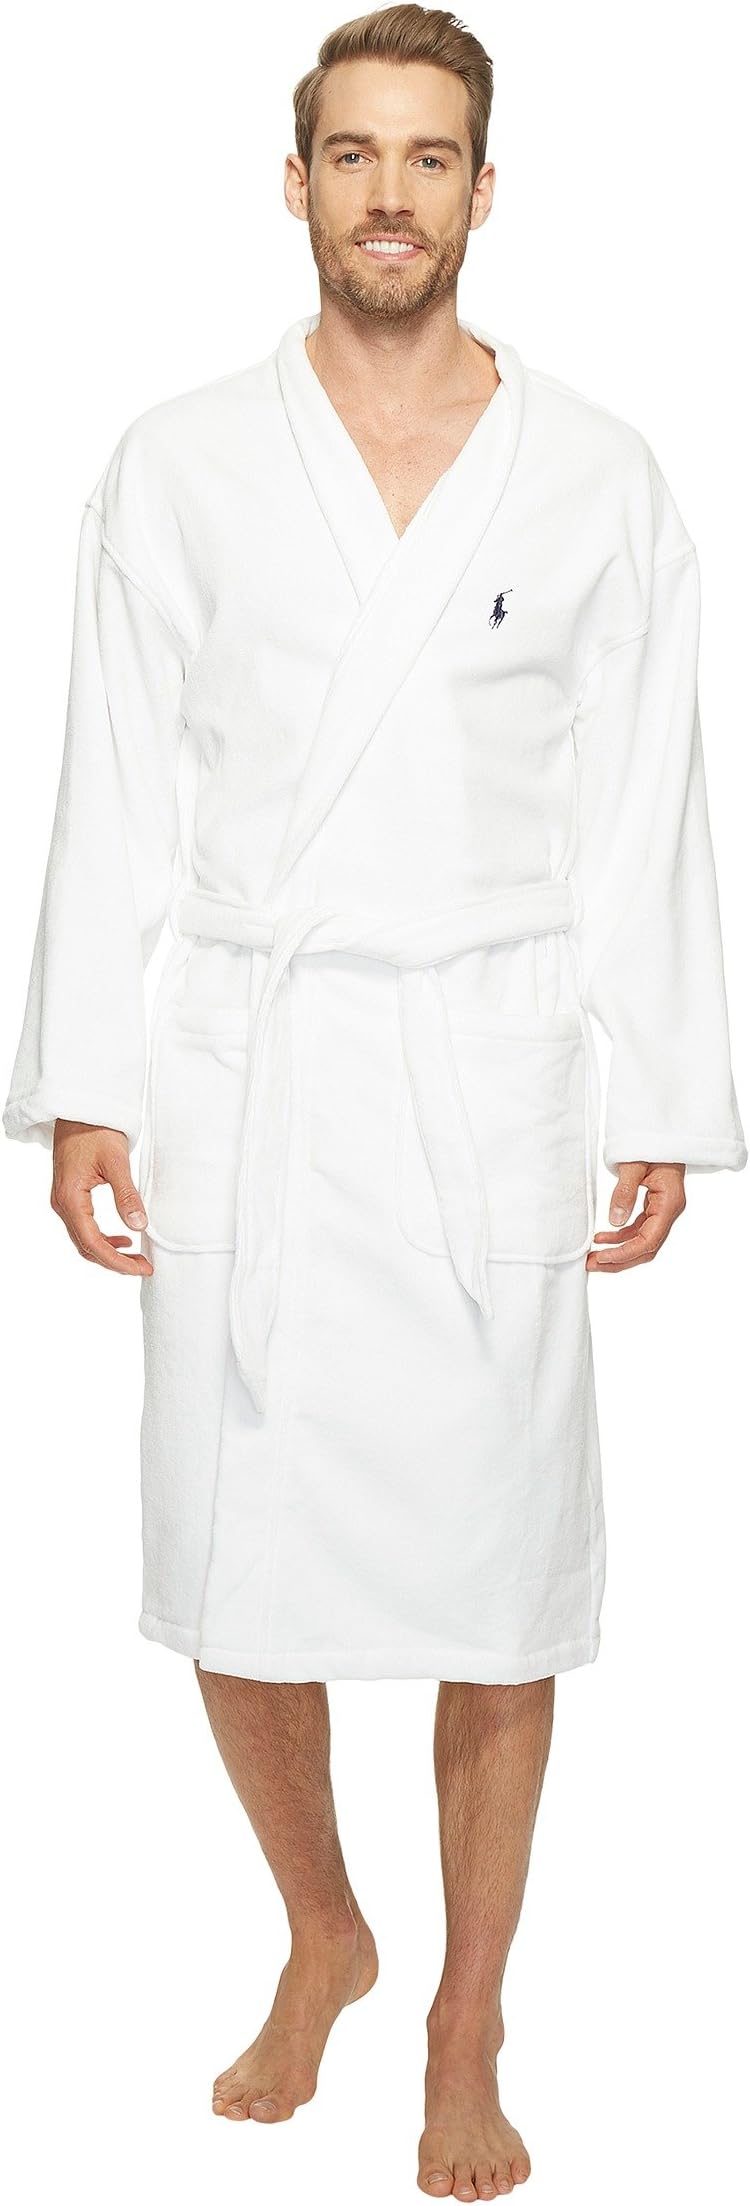 Халат Terry Shawl Robe Polo Ralph Lauren, белый халат cotton terry robe polo ralph lauren цвет cruise navy museum grey collar